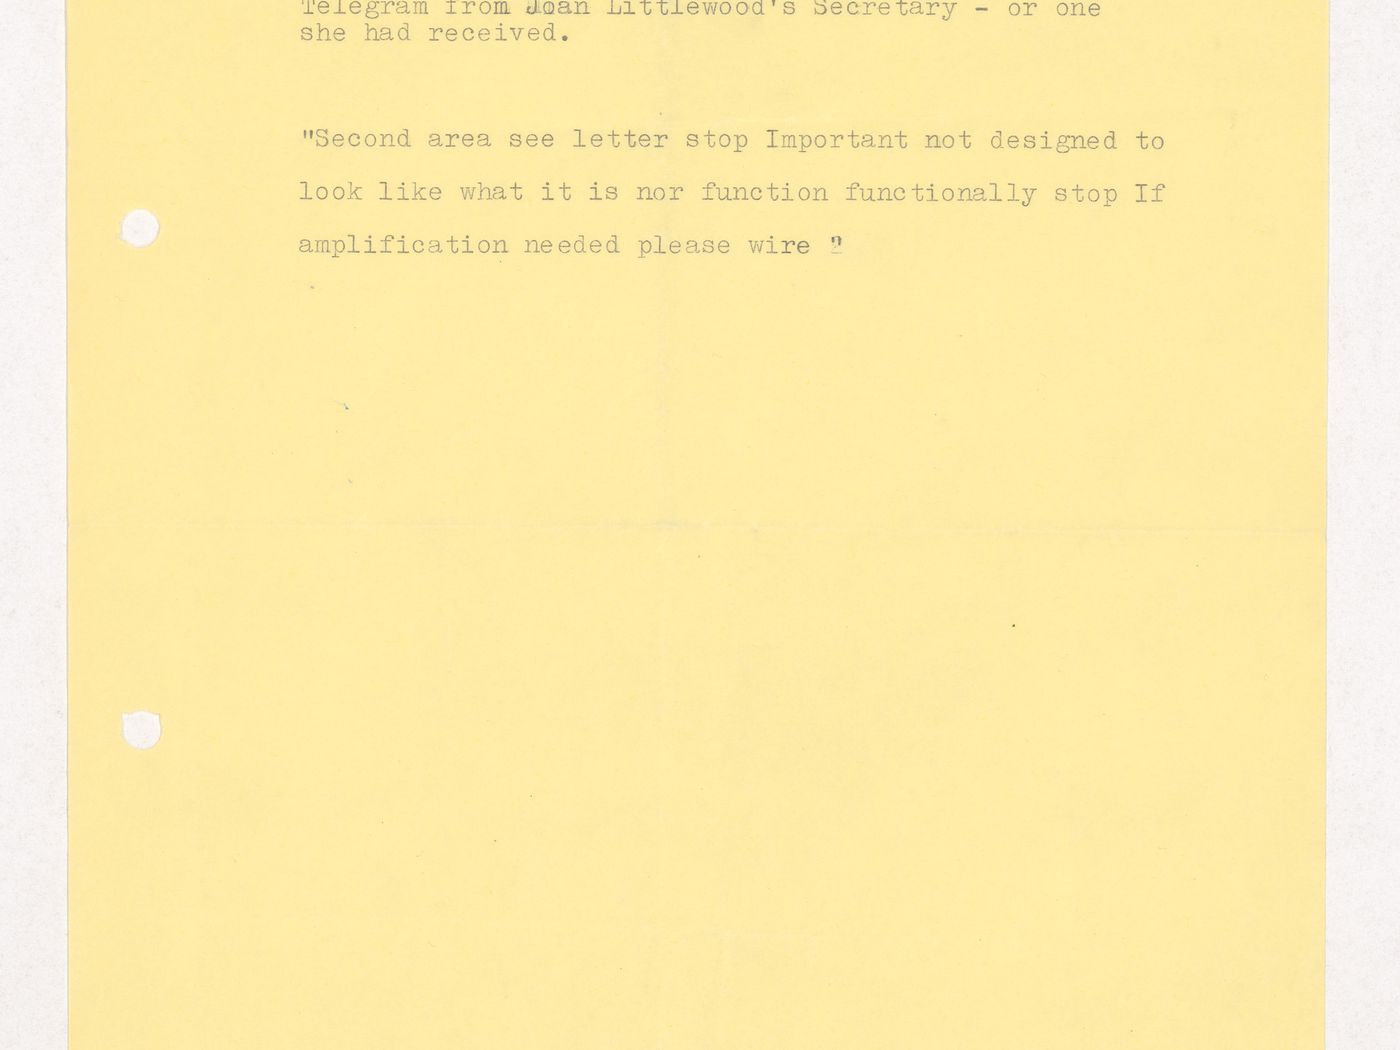 Telegram possibly from Joan Littlewood's secretary